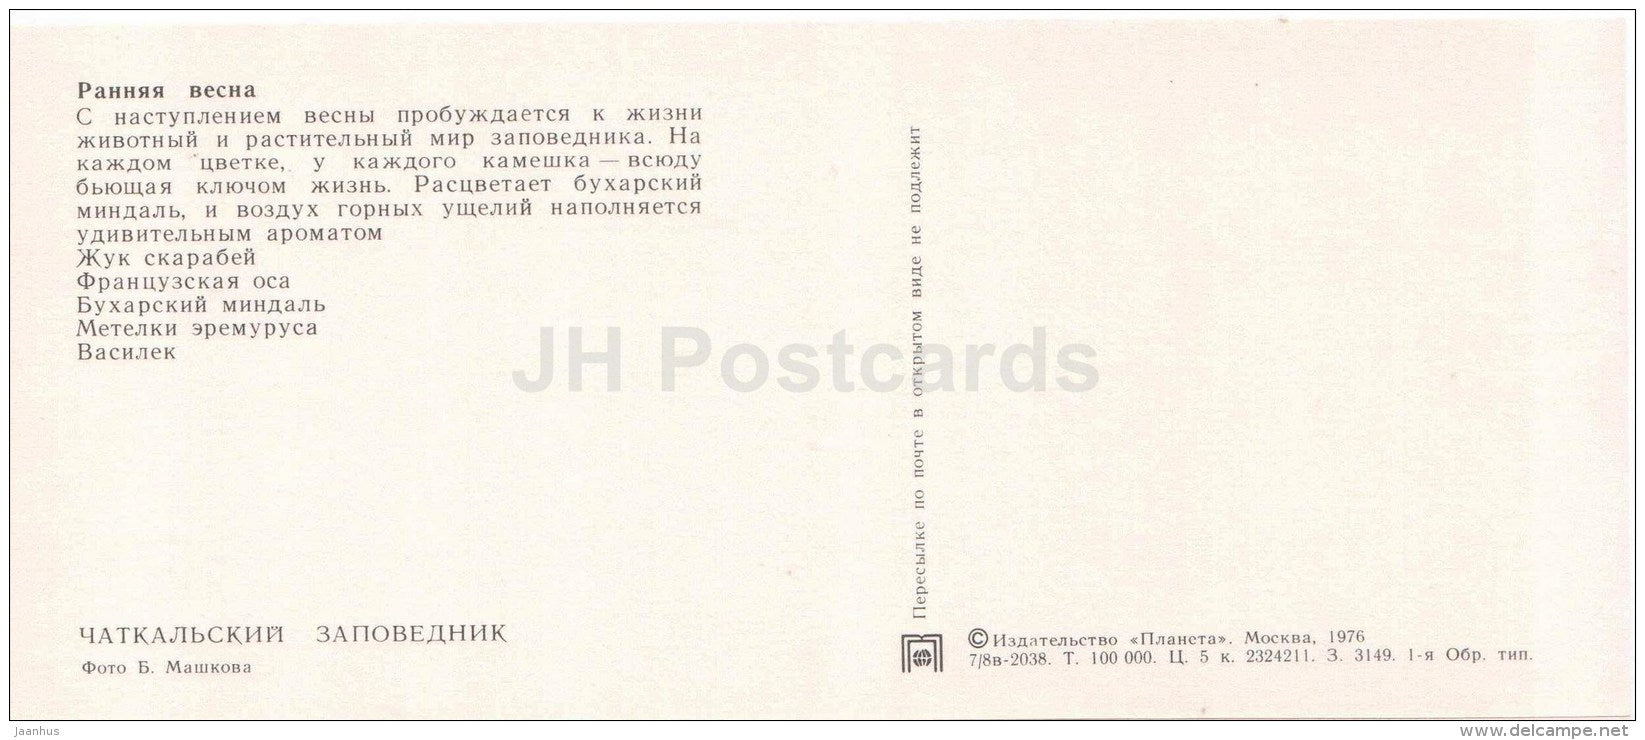 scarabeus - wasp - Bukhara almonds - cornflower - spring - Chatkalsky National Park - 1976 - Uzbekistan USSR - unused - JH Postcards